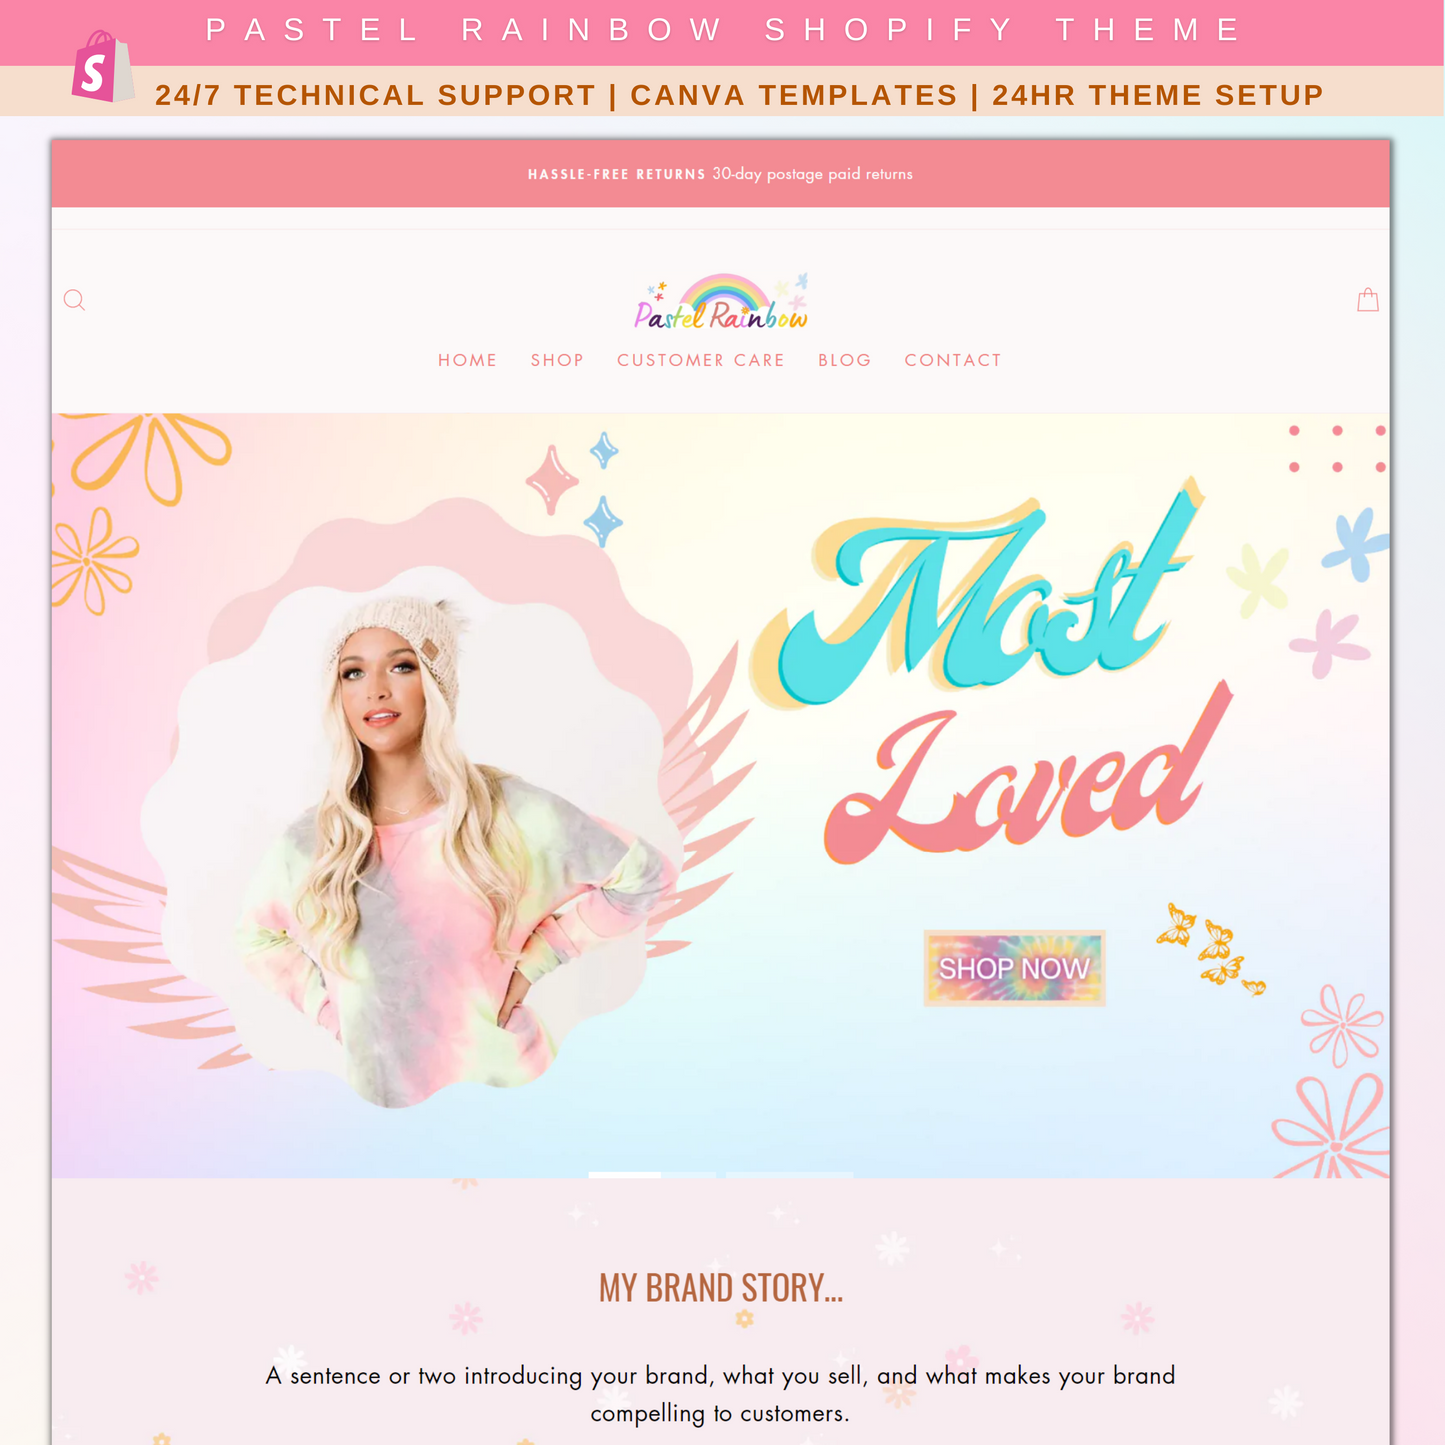 Shopify Theme Template - Pastel Shopify Theme - Shopify Template Design - Shopify 2.0 - Feminine Aesthetic design - Pink Boutique website